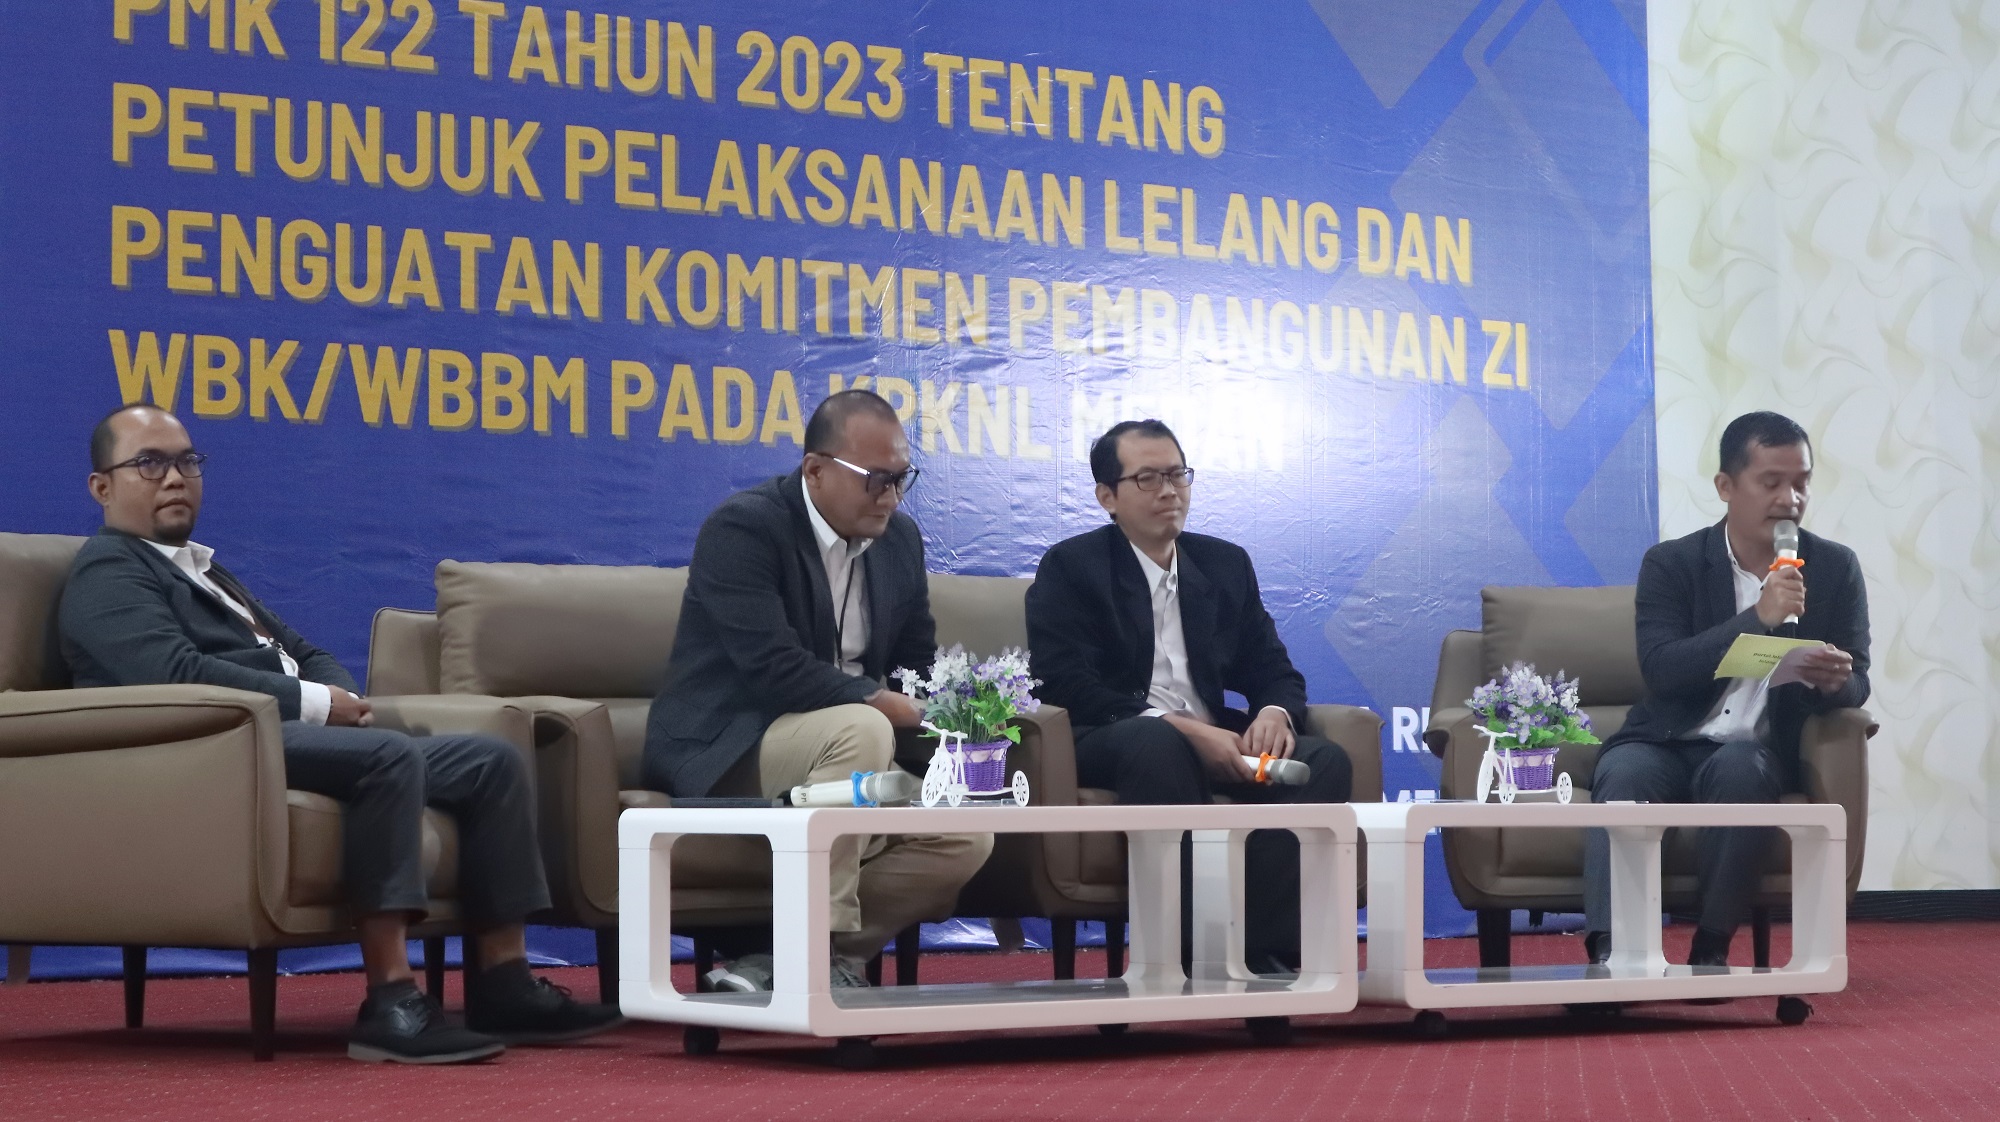 KPKNL Medan Gelar Sosialisasi PMK Lelang Terbaru dan Penguatan Komitmen Pembangunan ZI WBK/WBBM kepada Pengguna Layanan